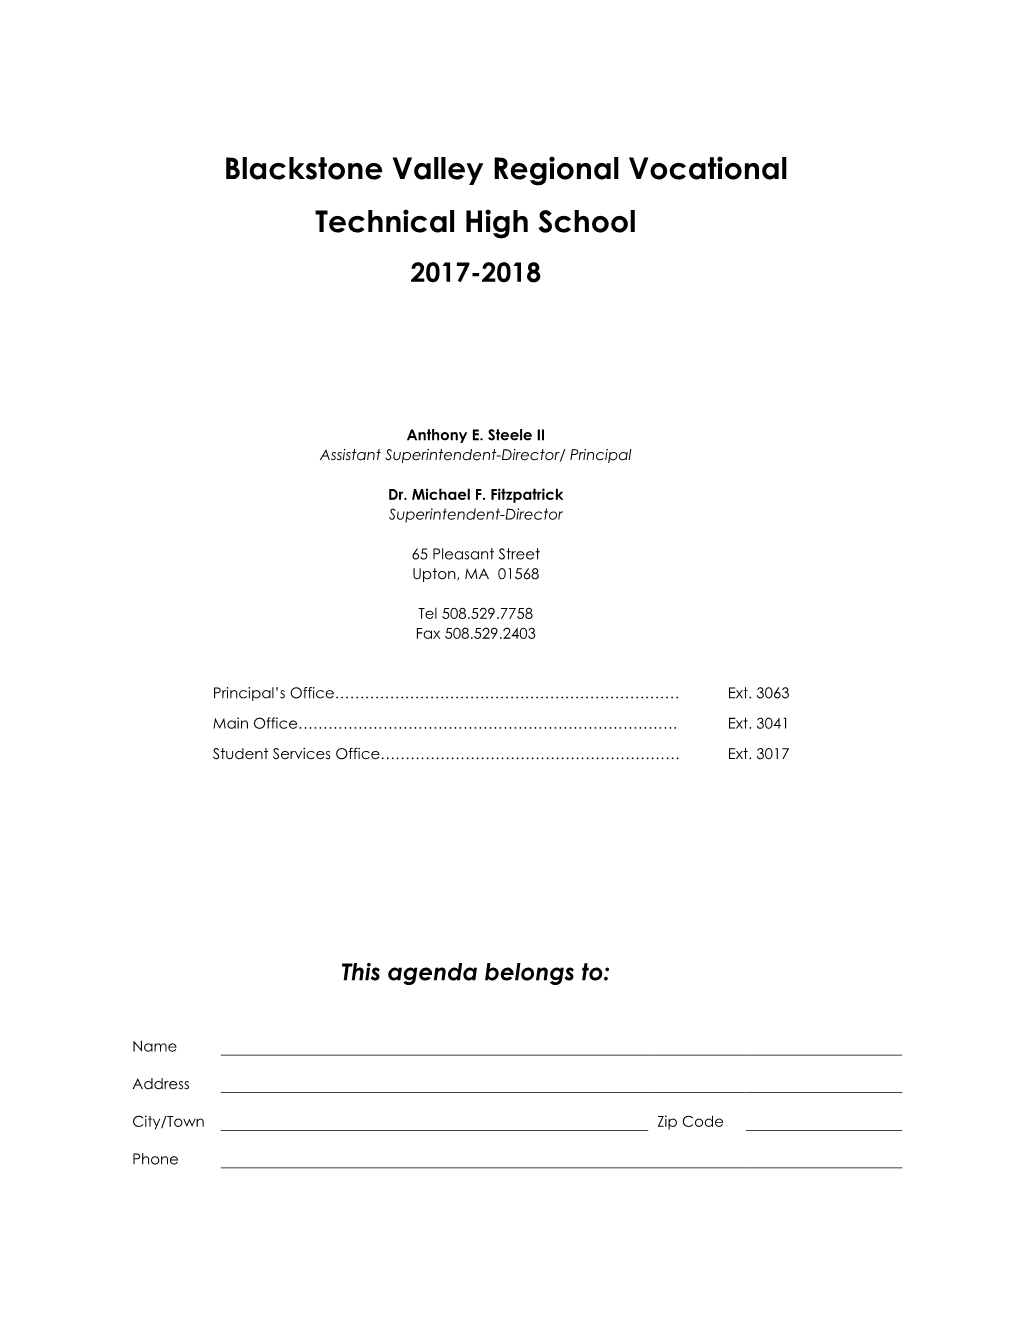 Blackstone Valley Regional Vocational Technical High School 2017-2018